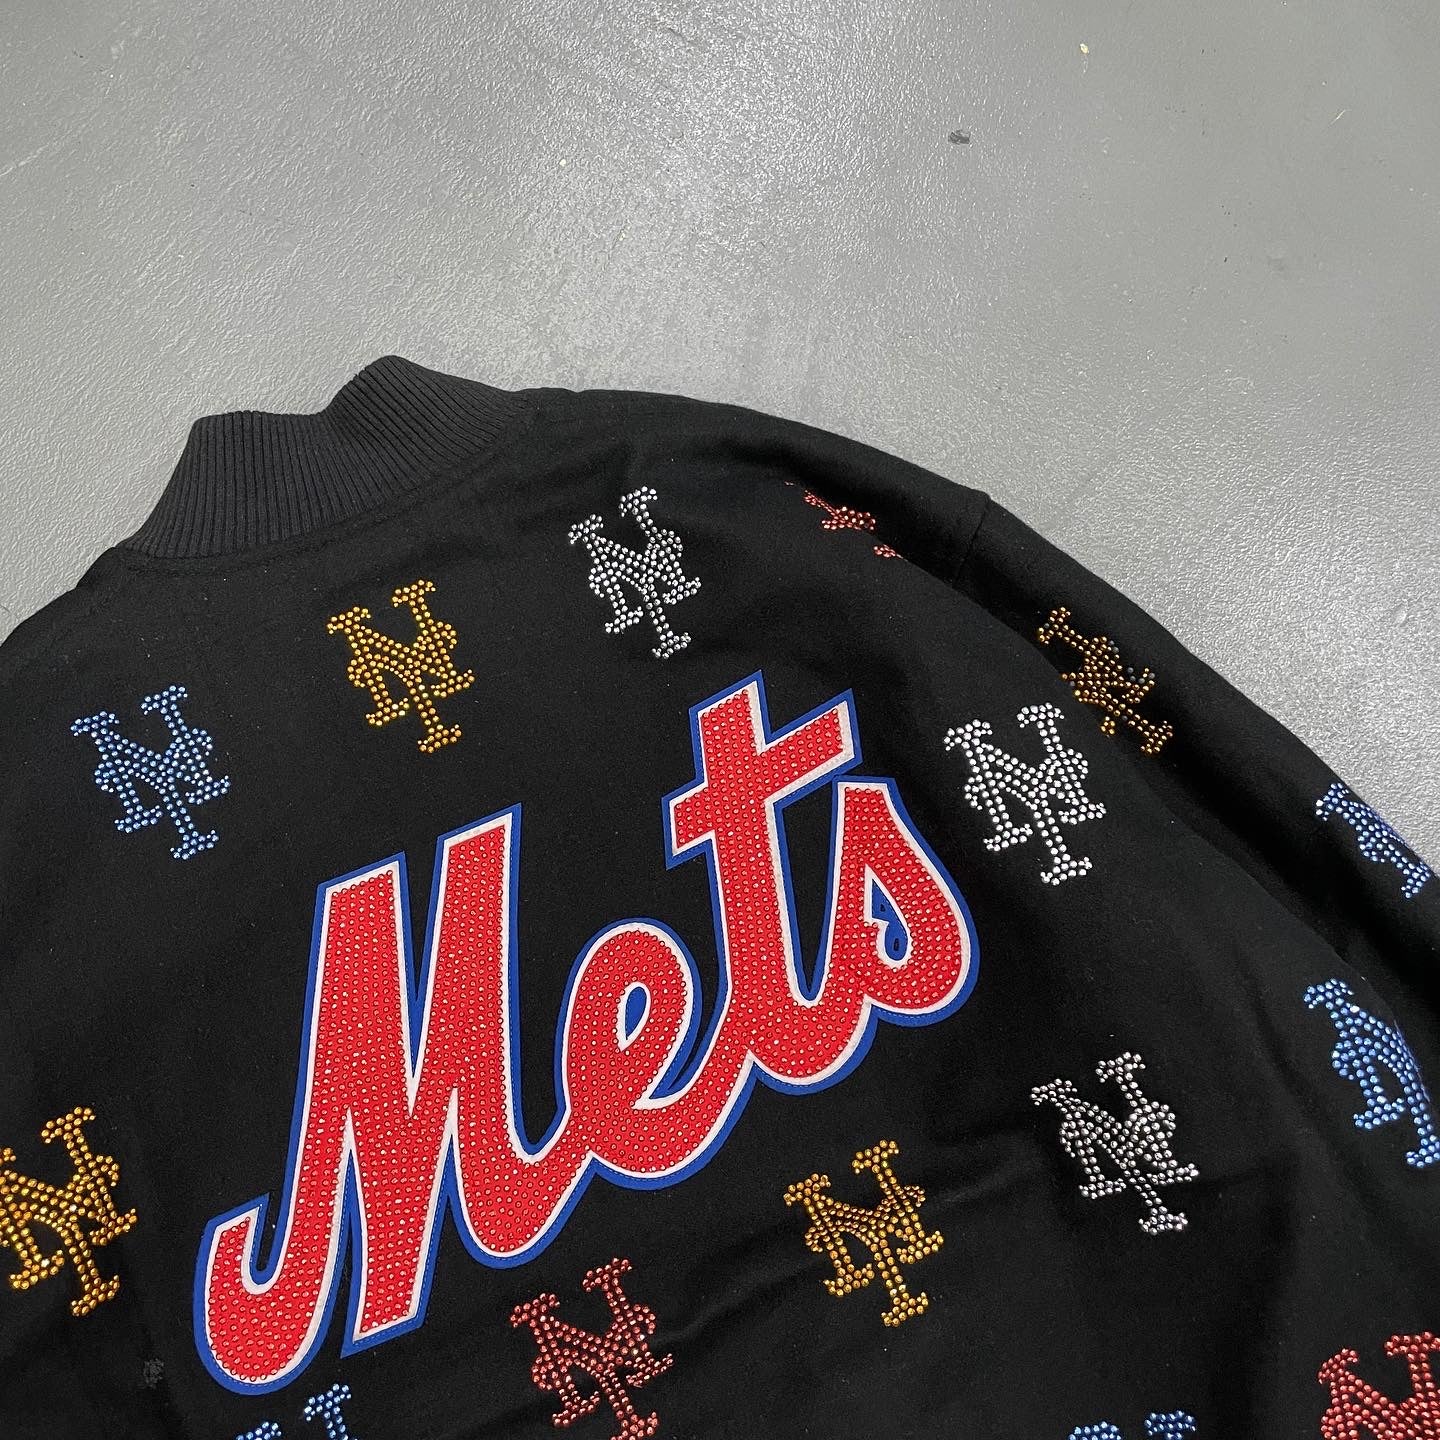 New York Mets DeadStock G-III Line Stoned Wool Stadium Jacket